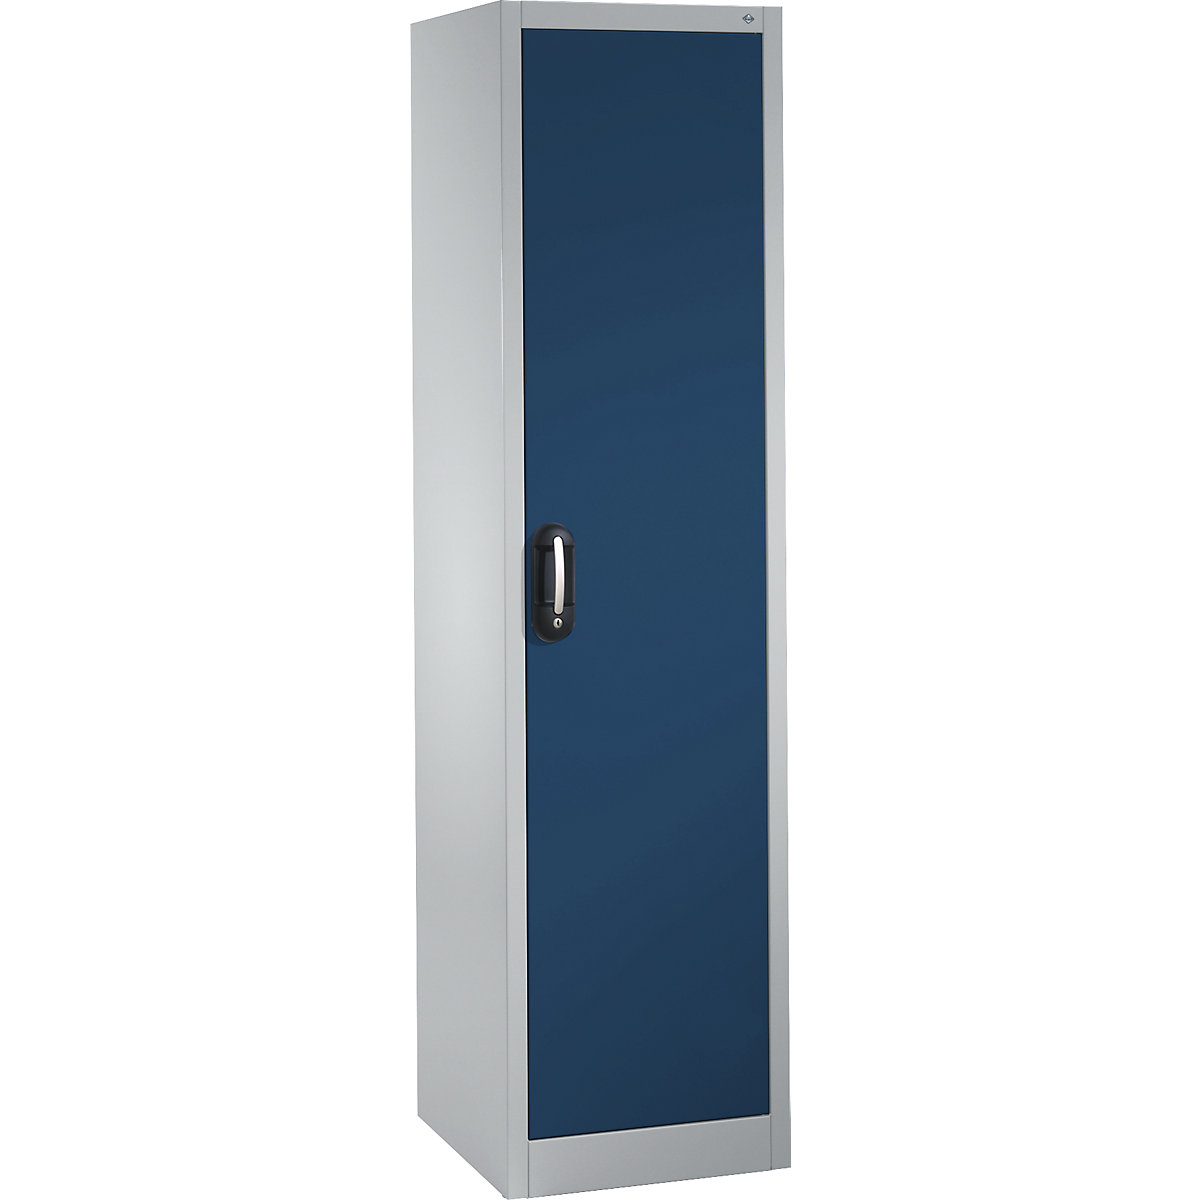 C+P – ACURADO universal cupboard, WxD 500 x 500 mm, light grey / lapis blue